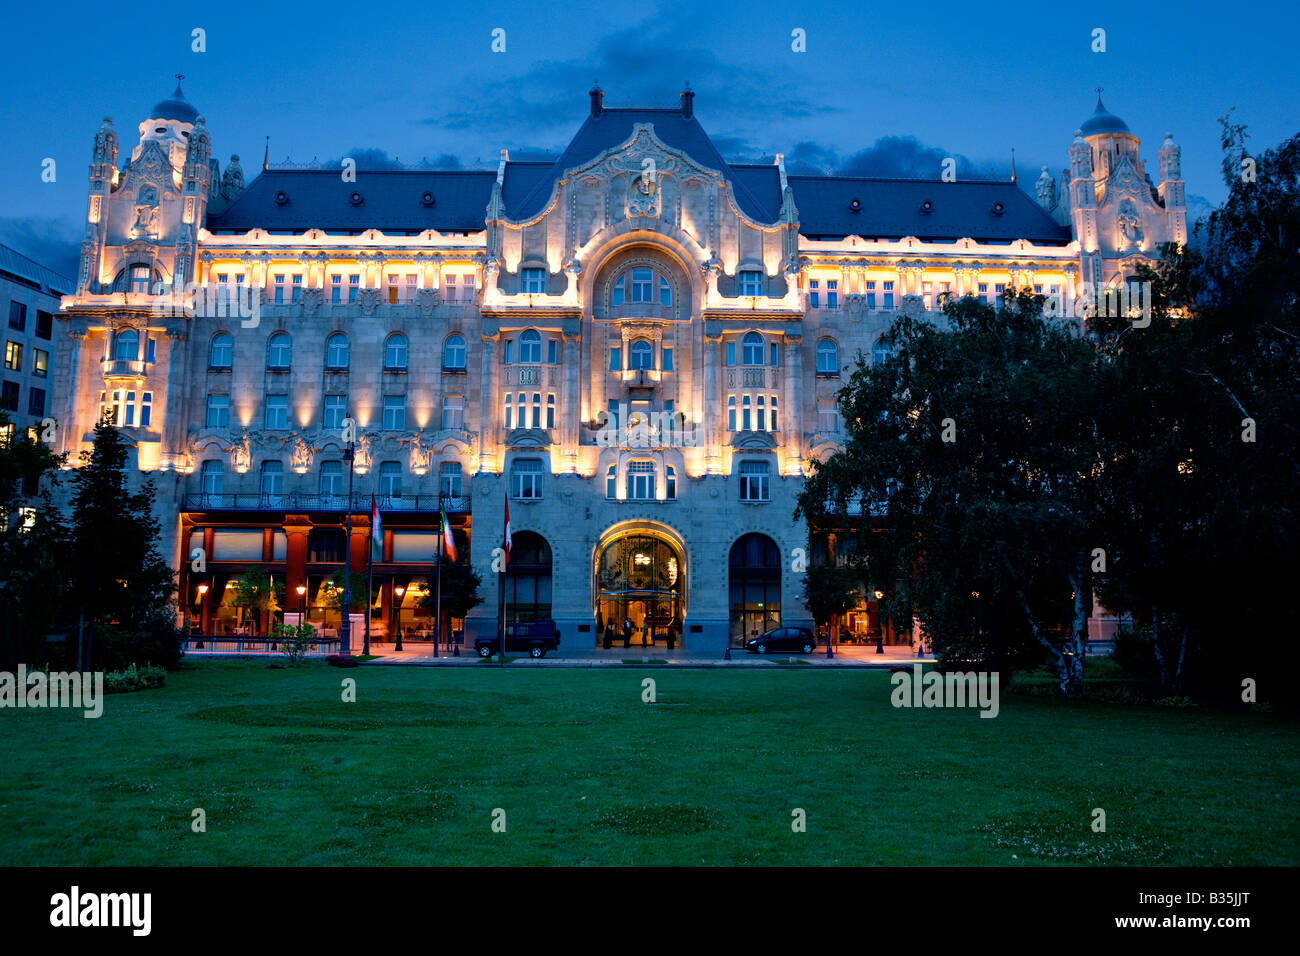 The Gresham palace Four Seasons hotel in Budapest Hungary Stock Photo